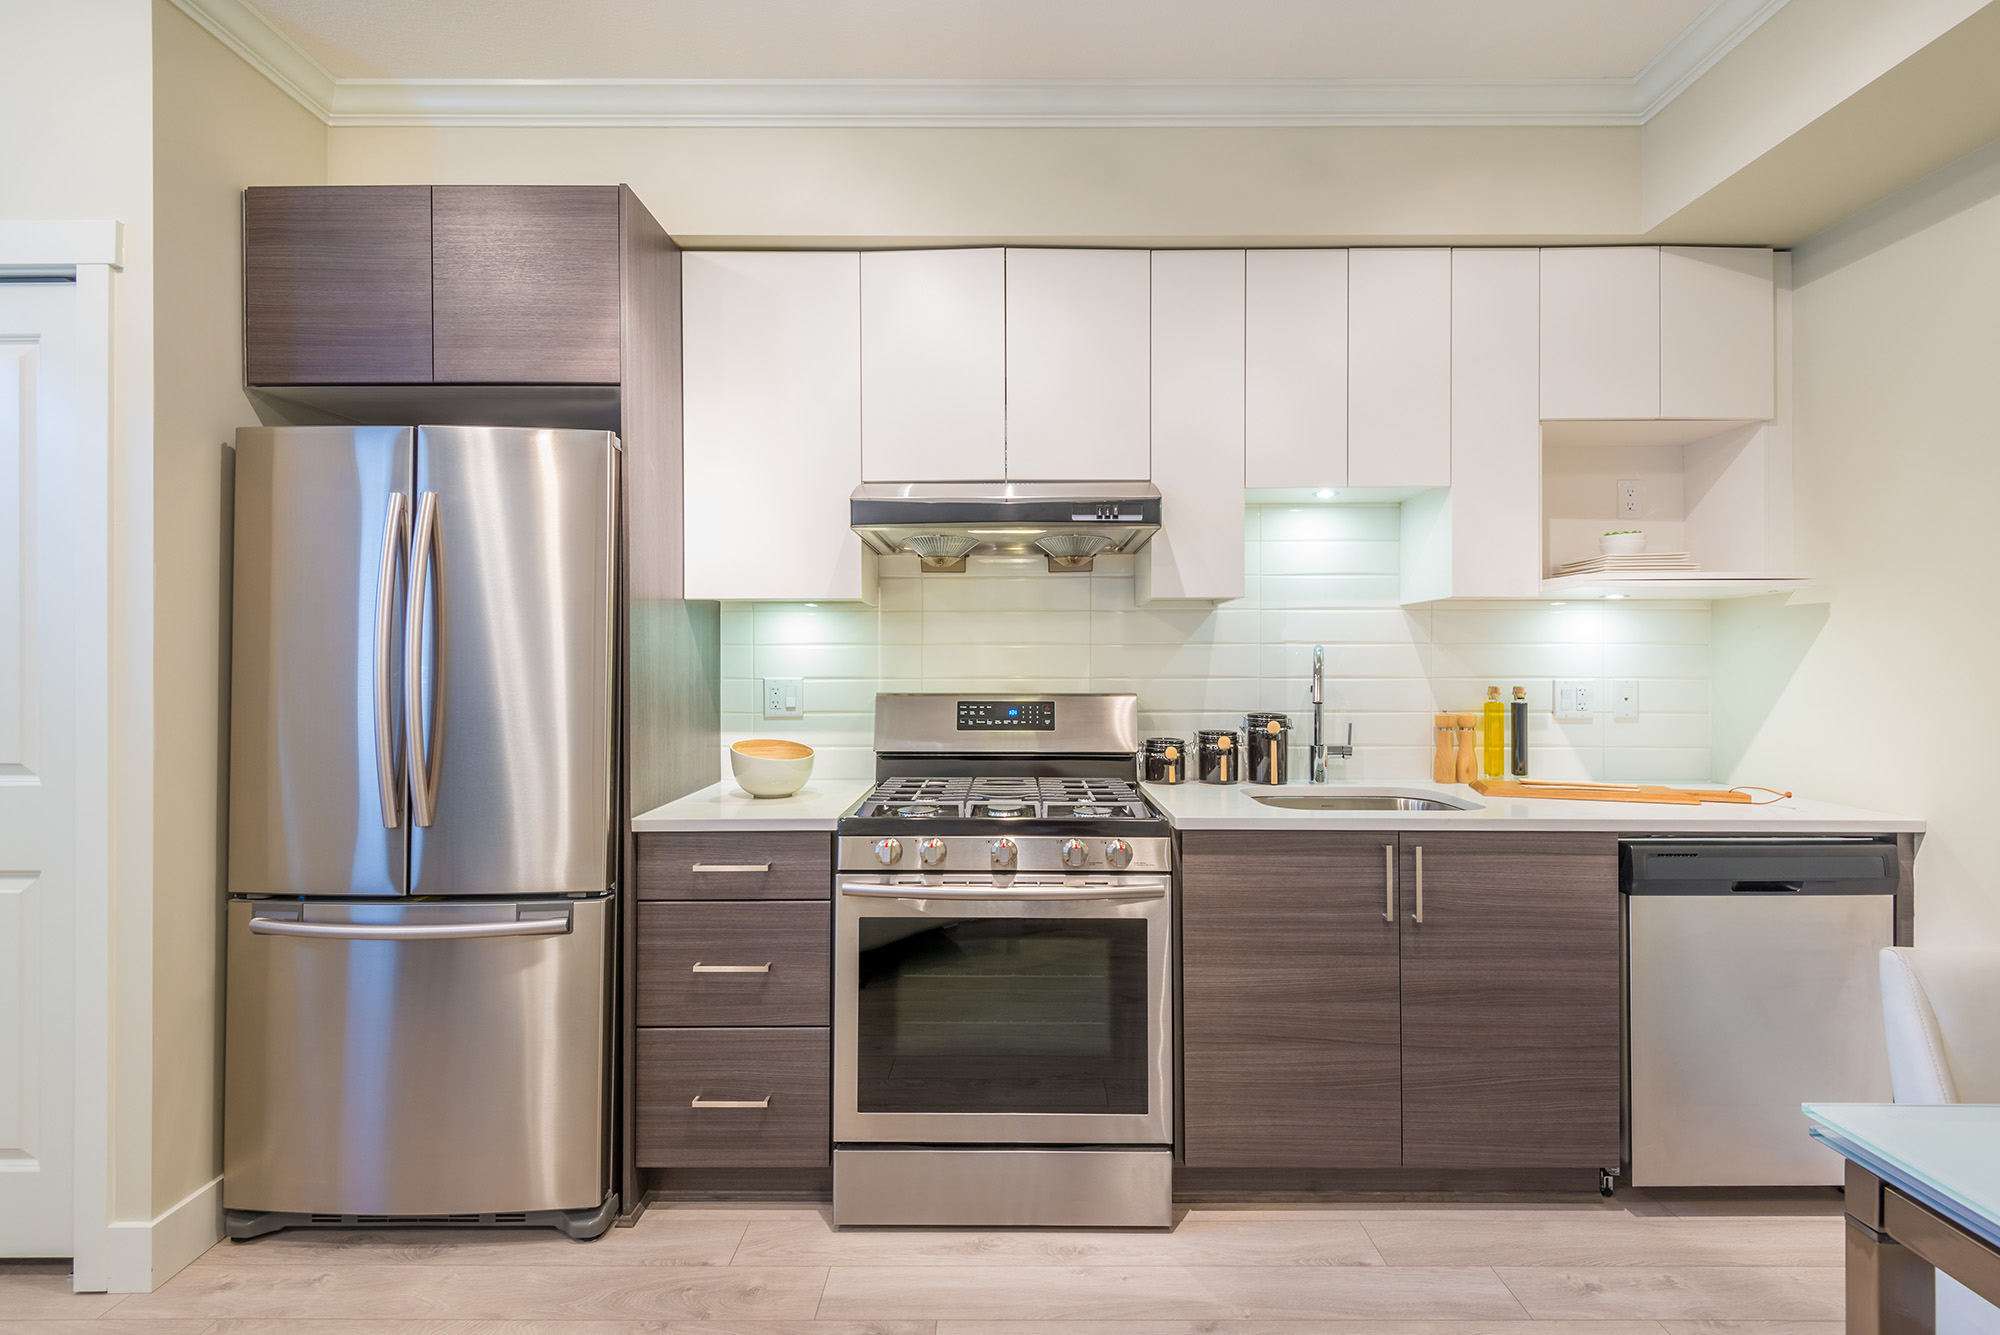 Modern, bright, clean, kitchen interior with stainless steel app